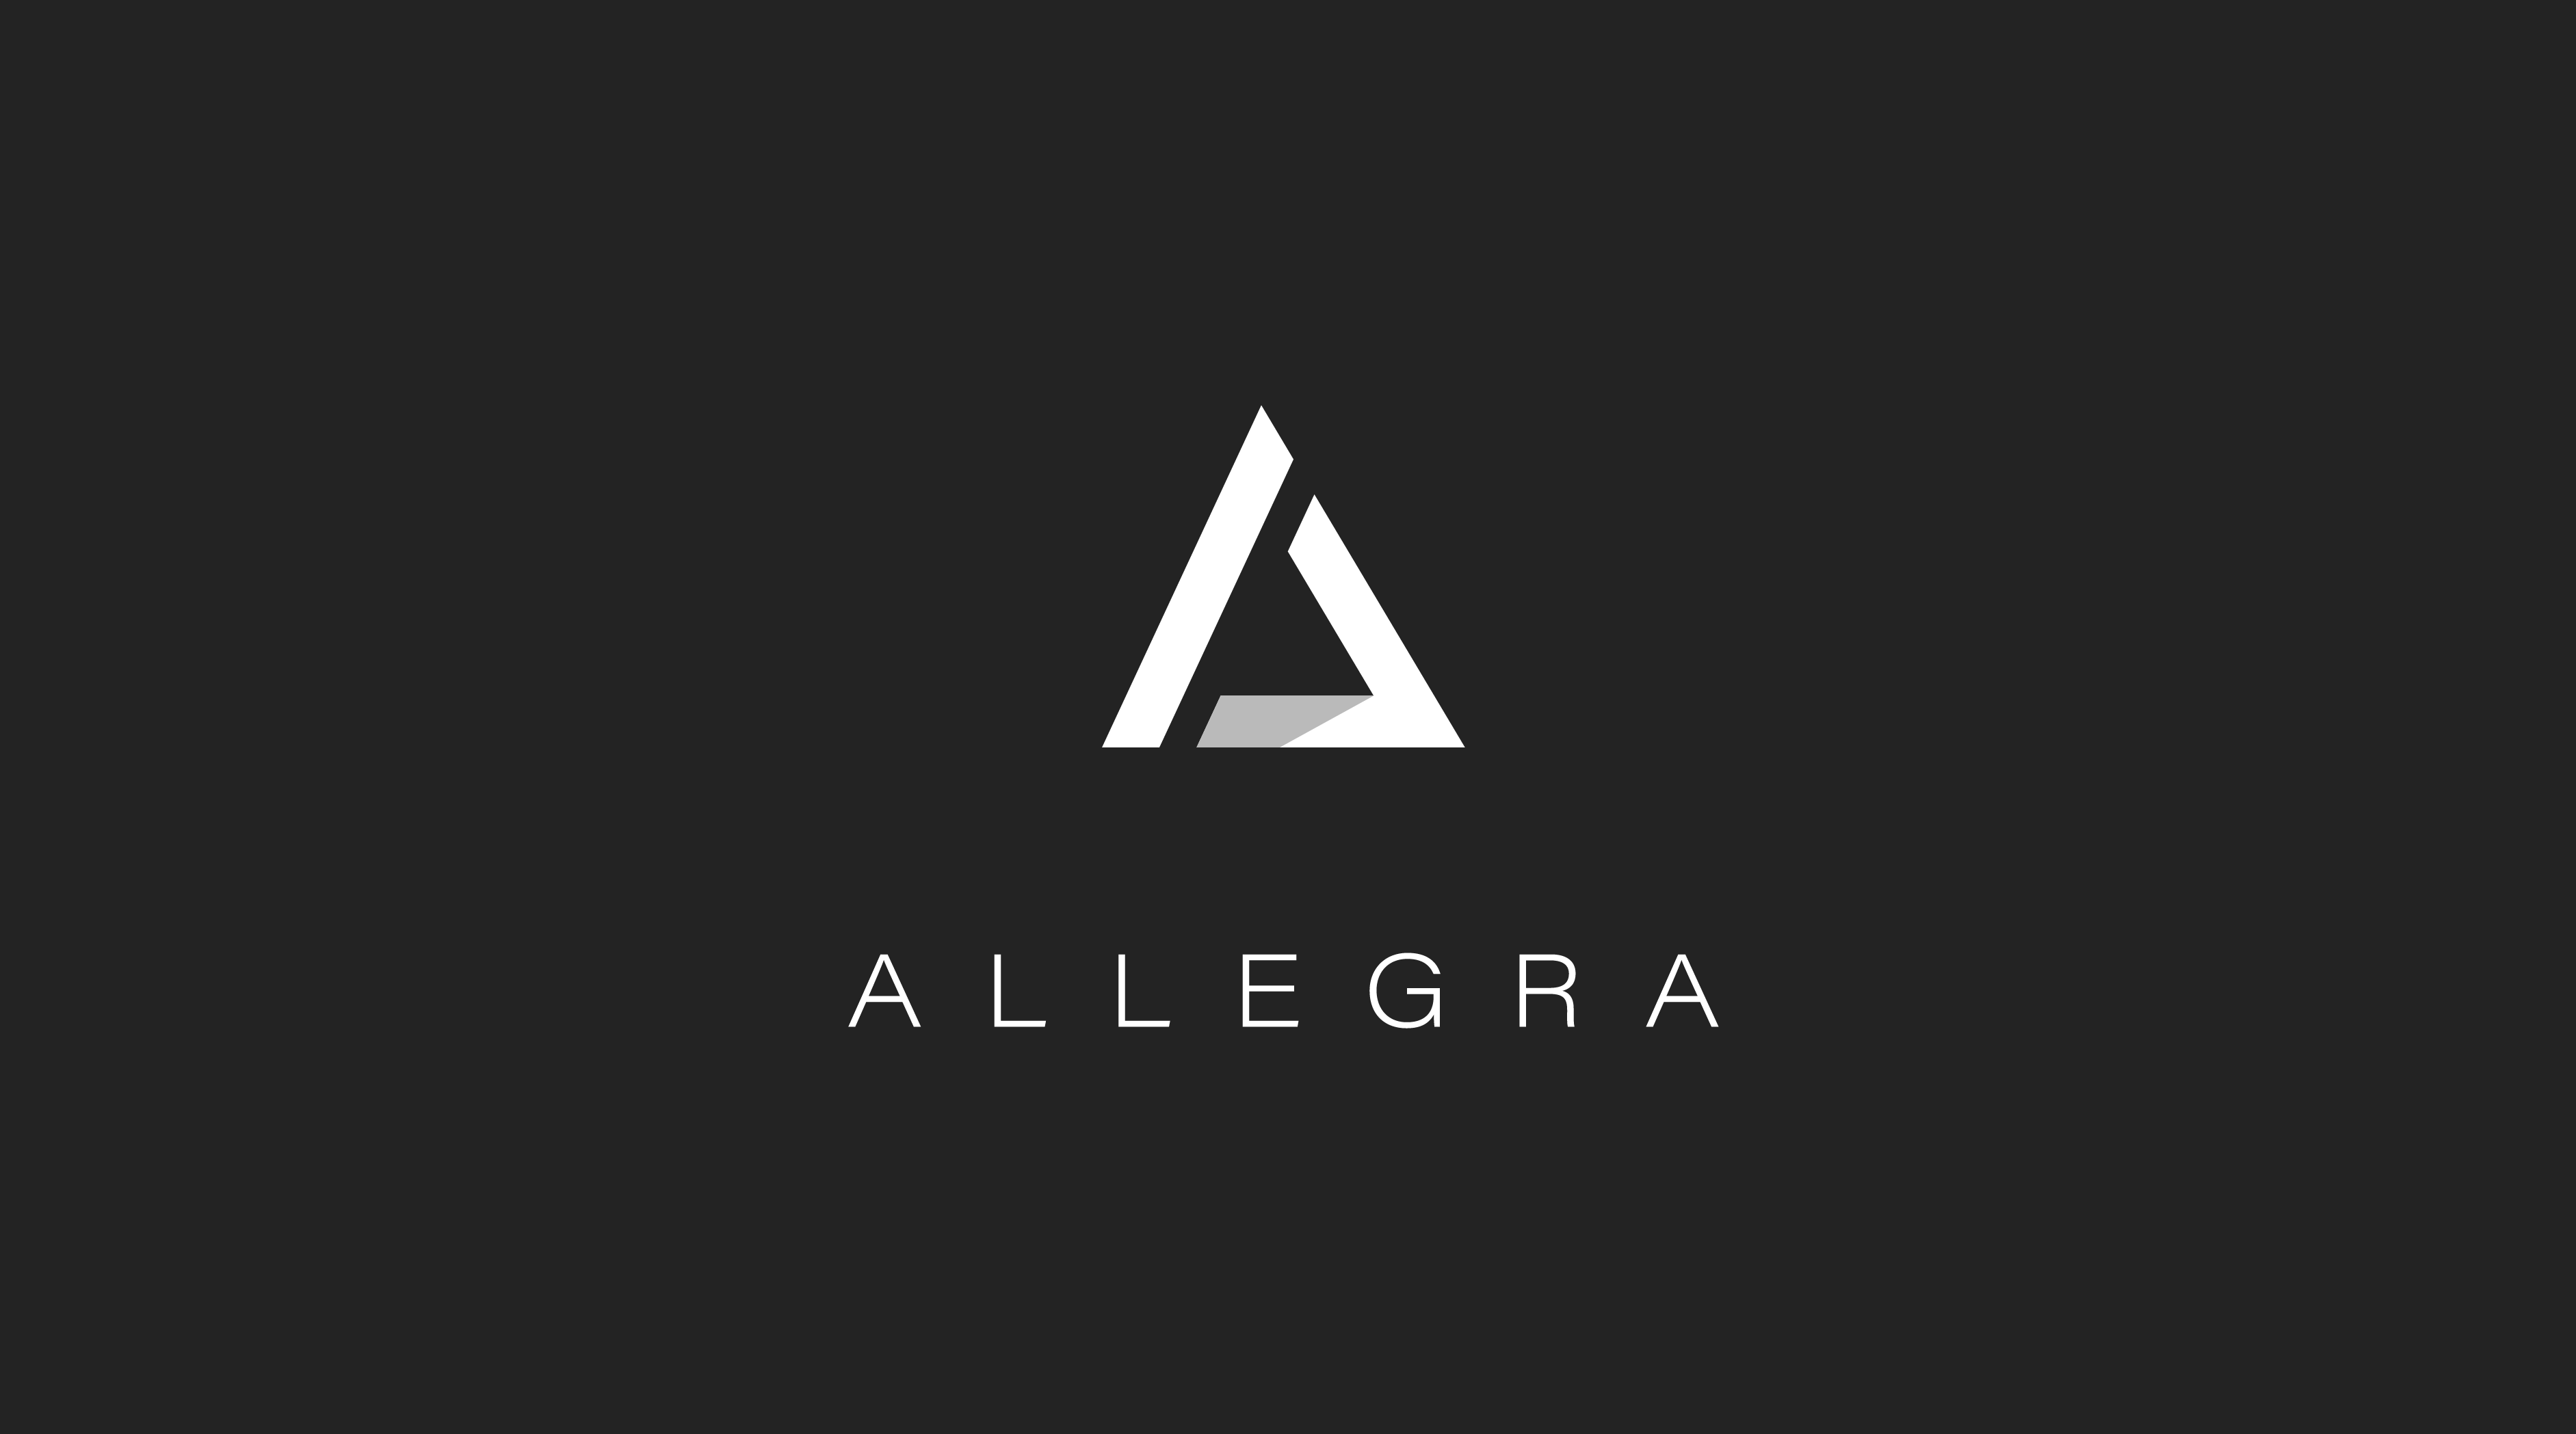 Allegra solutions